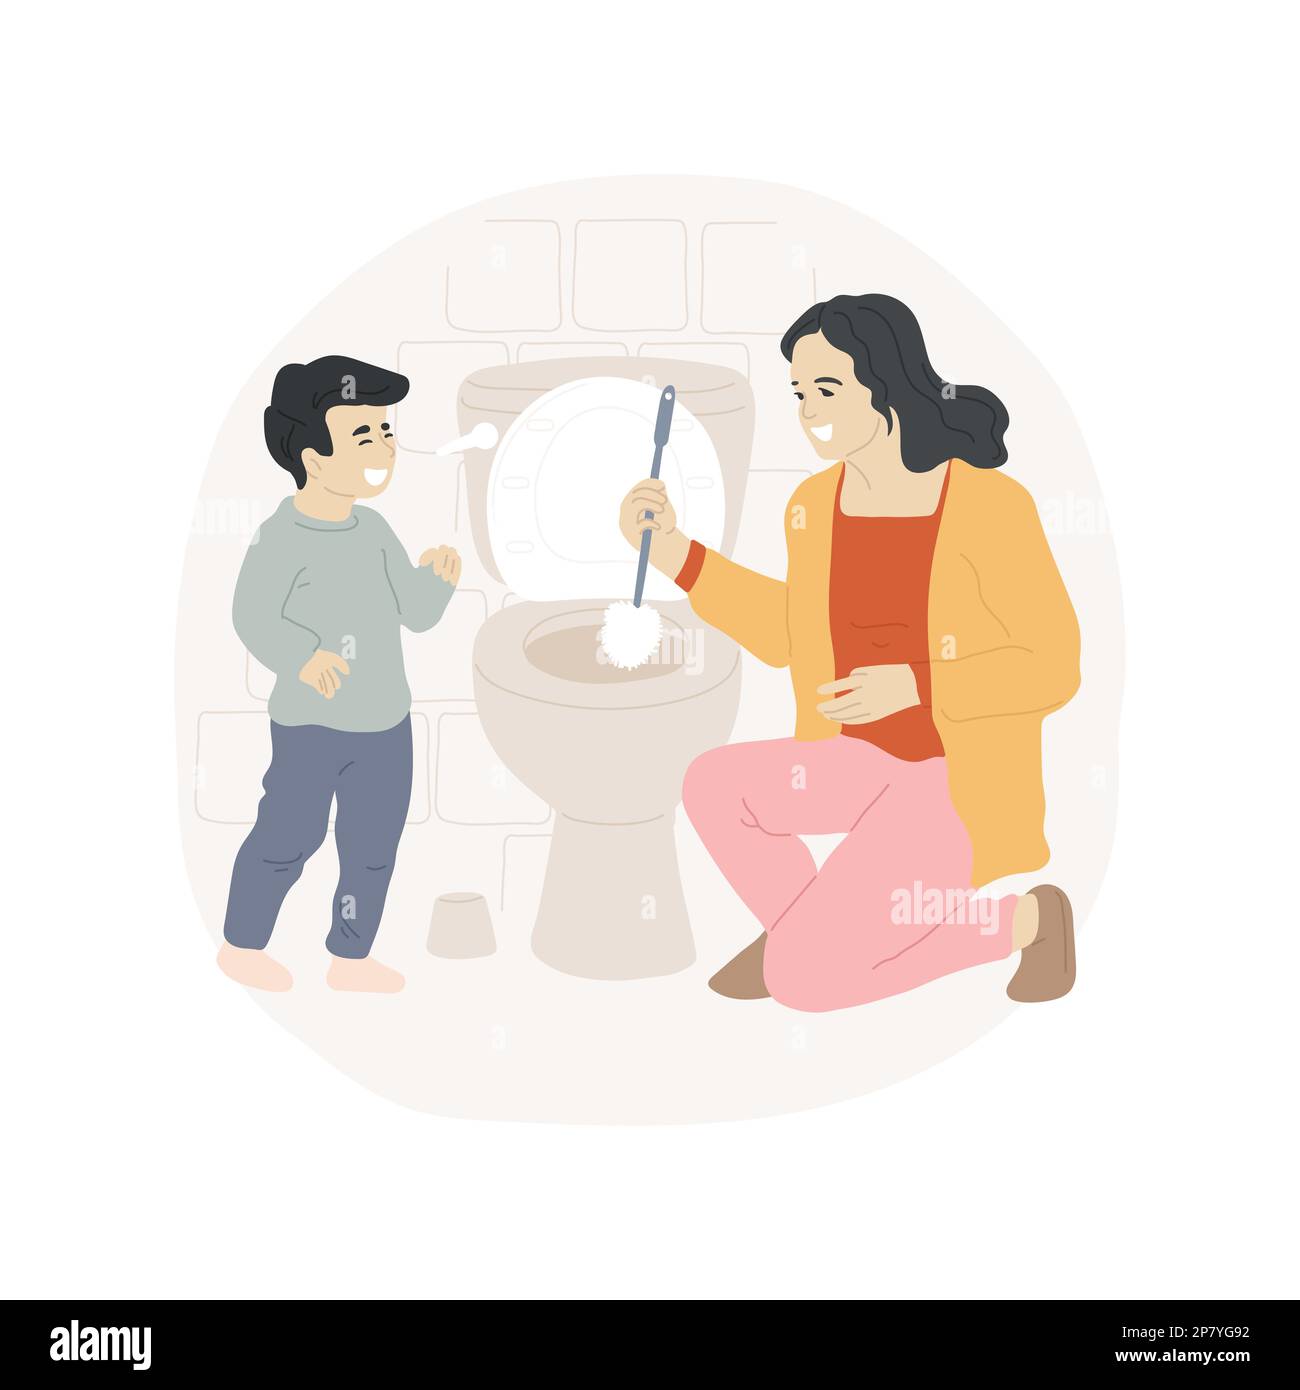 Use a toilet brush isolated cartoon vector illustration. Woman using a brush, teach kid to clean the toilet, keep bathroom clean, personal hygiene, family sanitary rules vector cartoon. Stock Vector